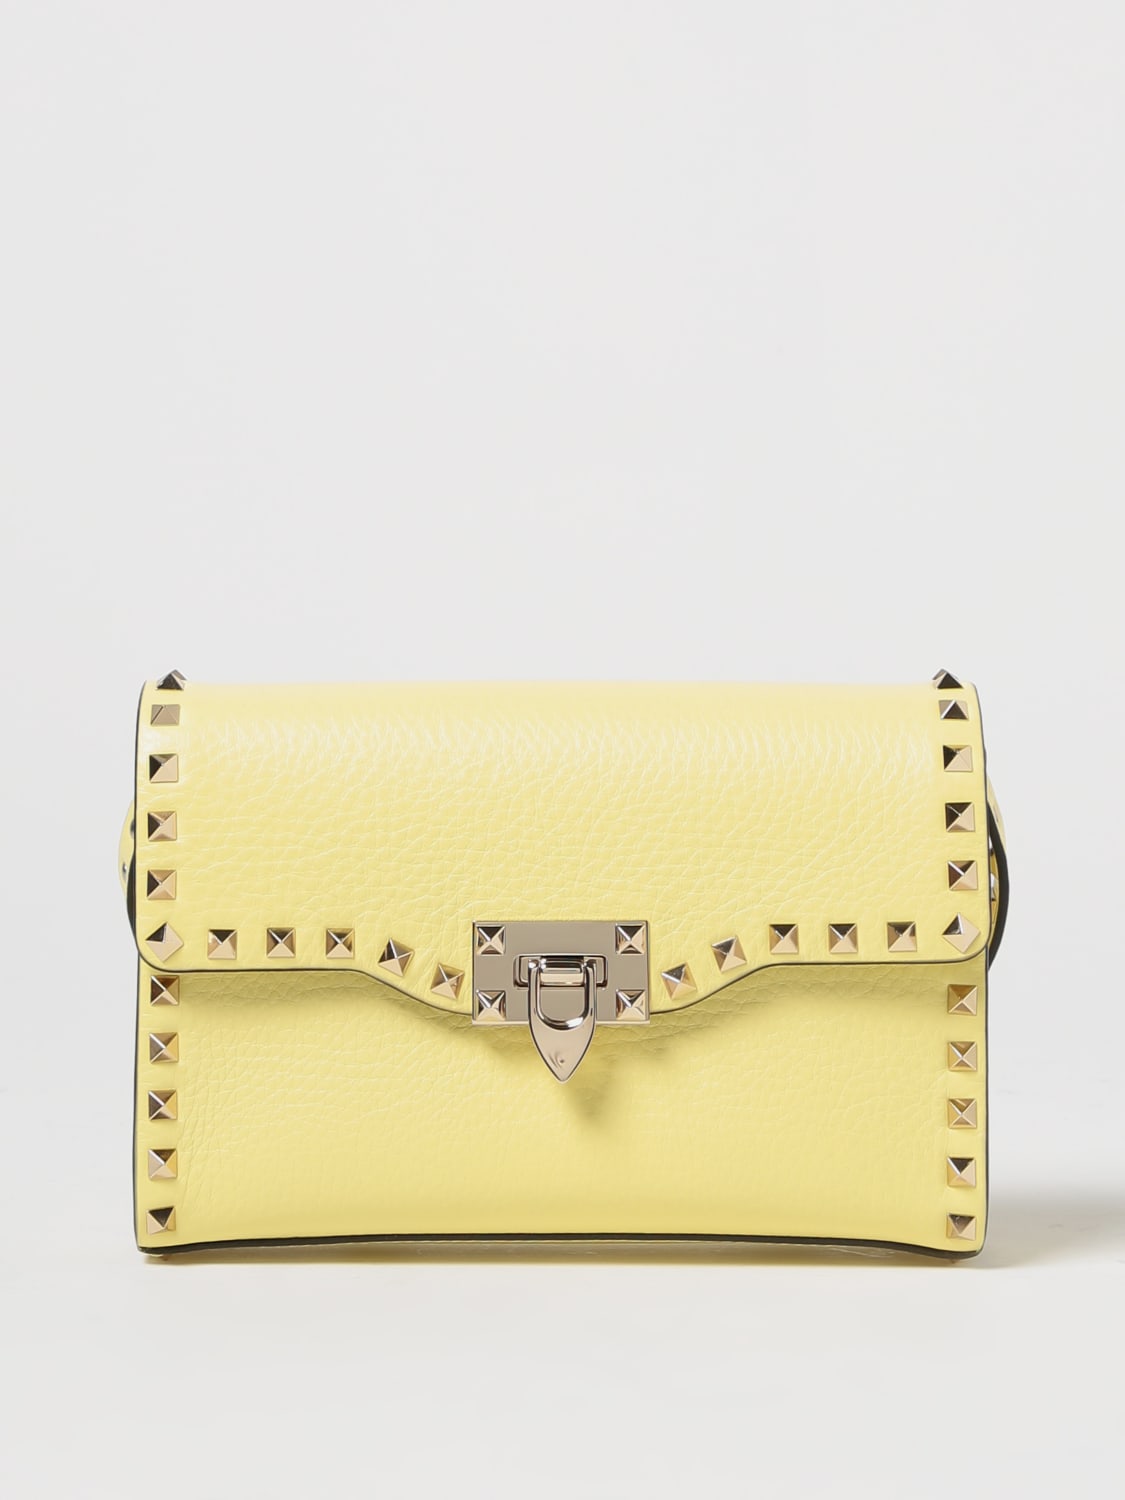 Fashion Leather Luxury Embossed Square Shoulder Bag Handbags Purses Wallet  Crossbody Bag YELLOW 